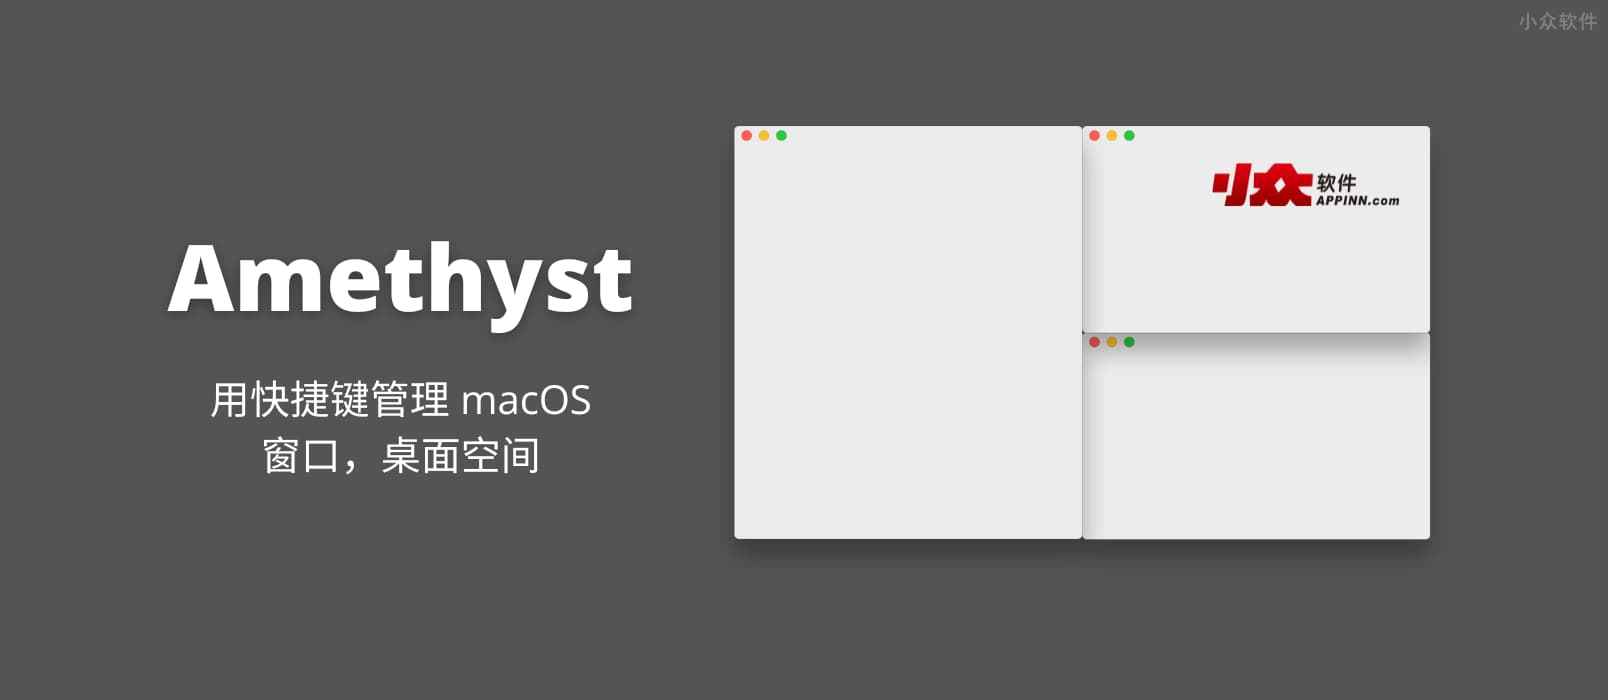 Amethyst - 平铺式窗口布局工具，用快捷键管理 macOS 窗口，桌面空间